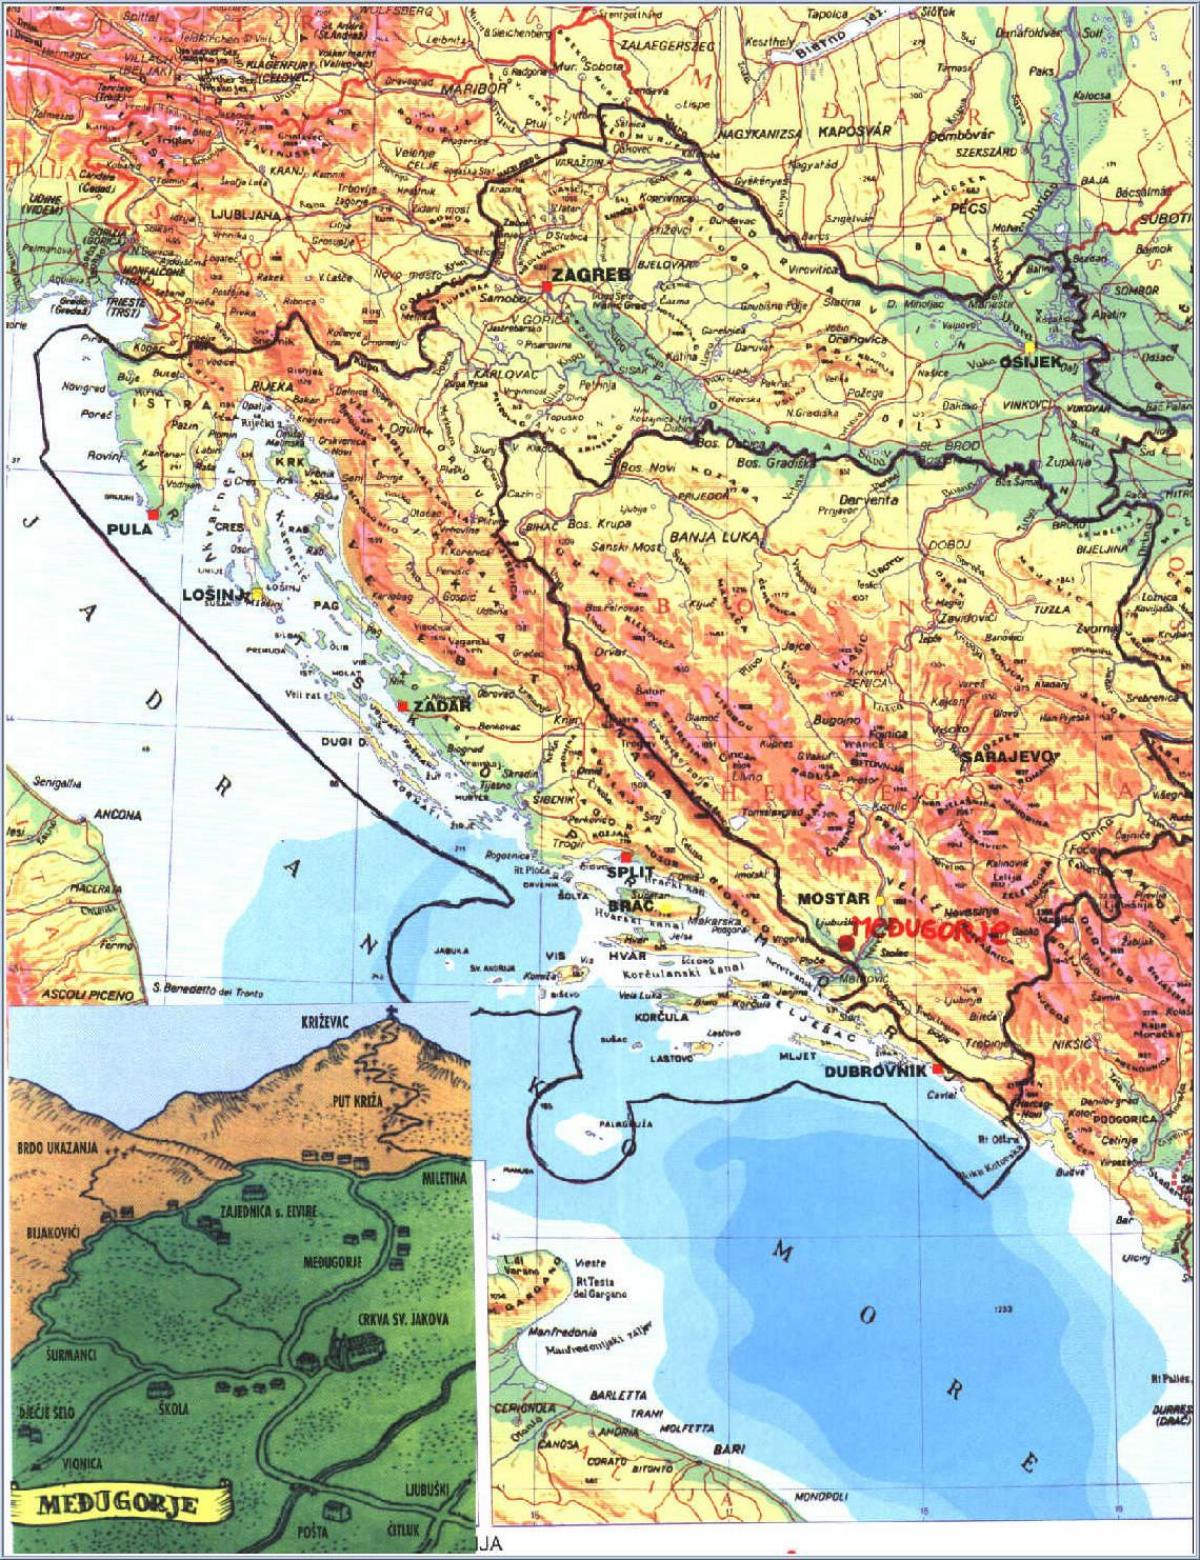 kort over medjugorje i Bosnien-Hercegovina